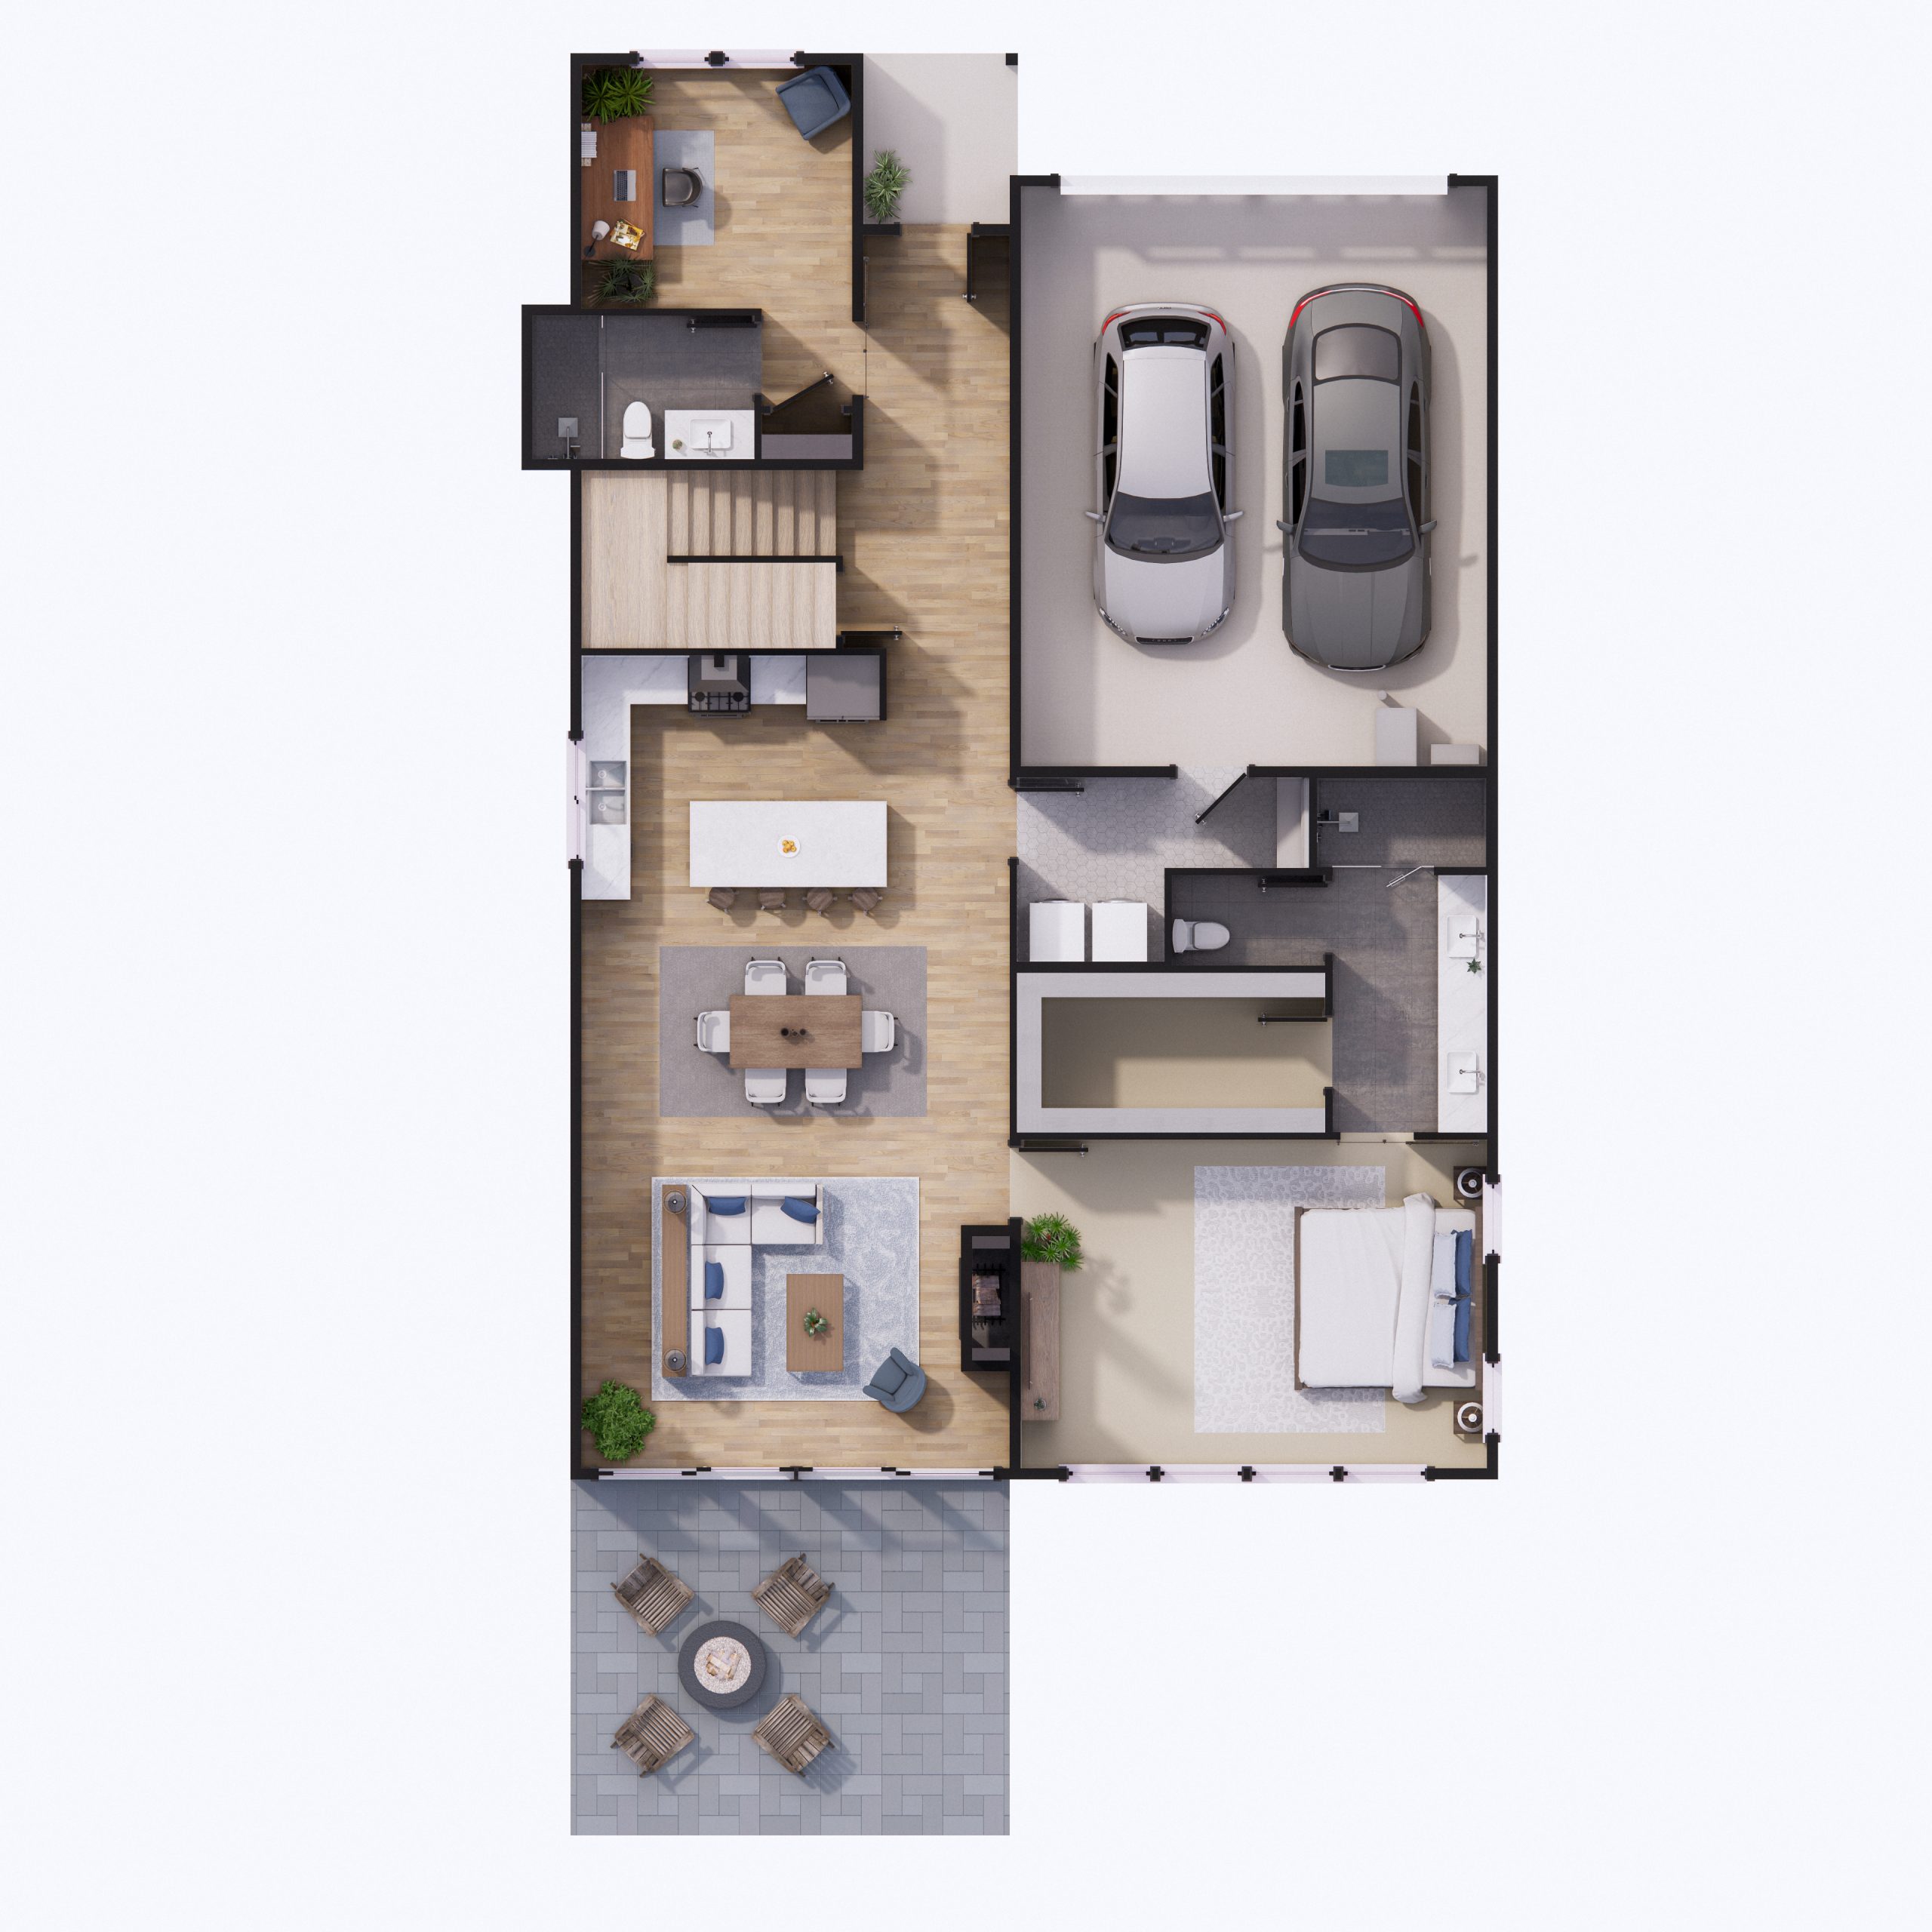 LC Heights - Lot 10 - FP Rendering Main Floor Revised[58]